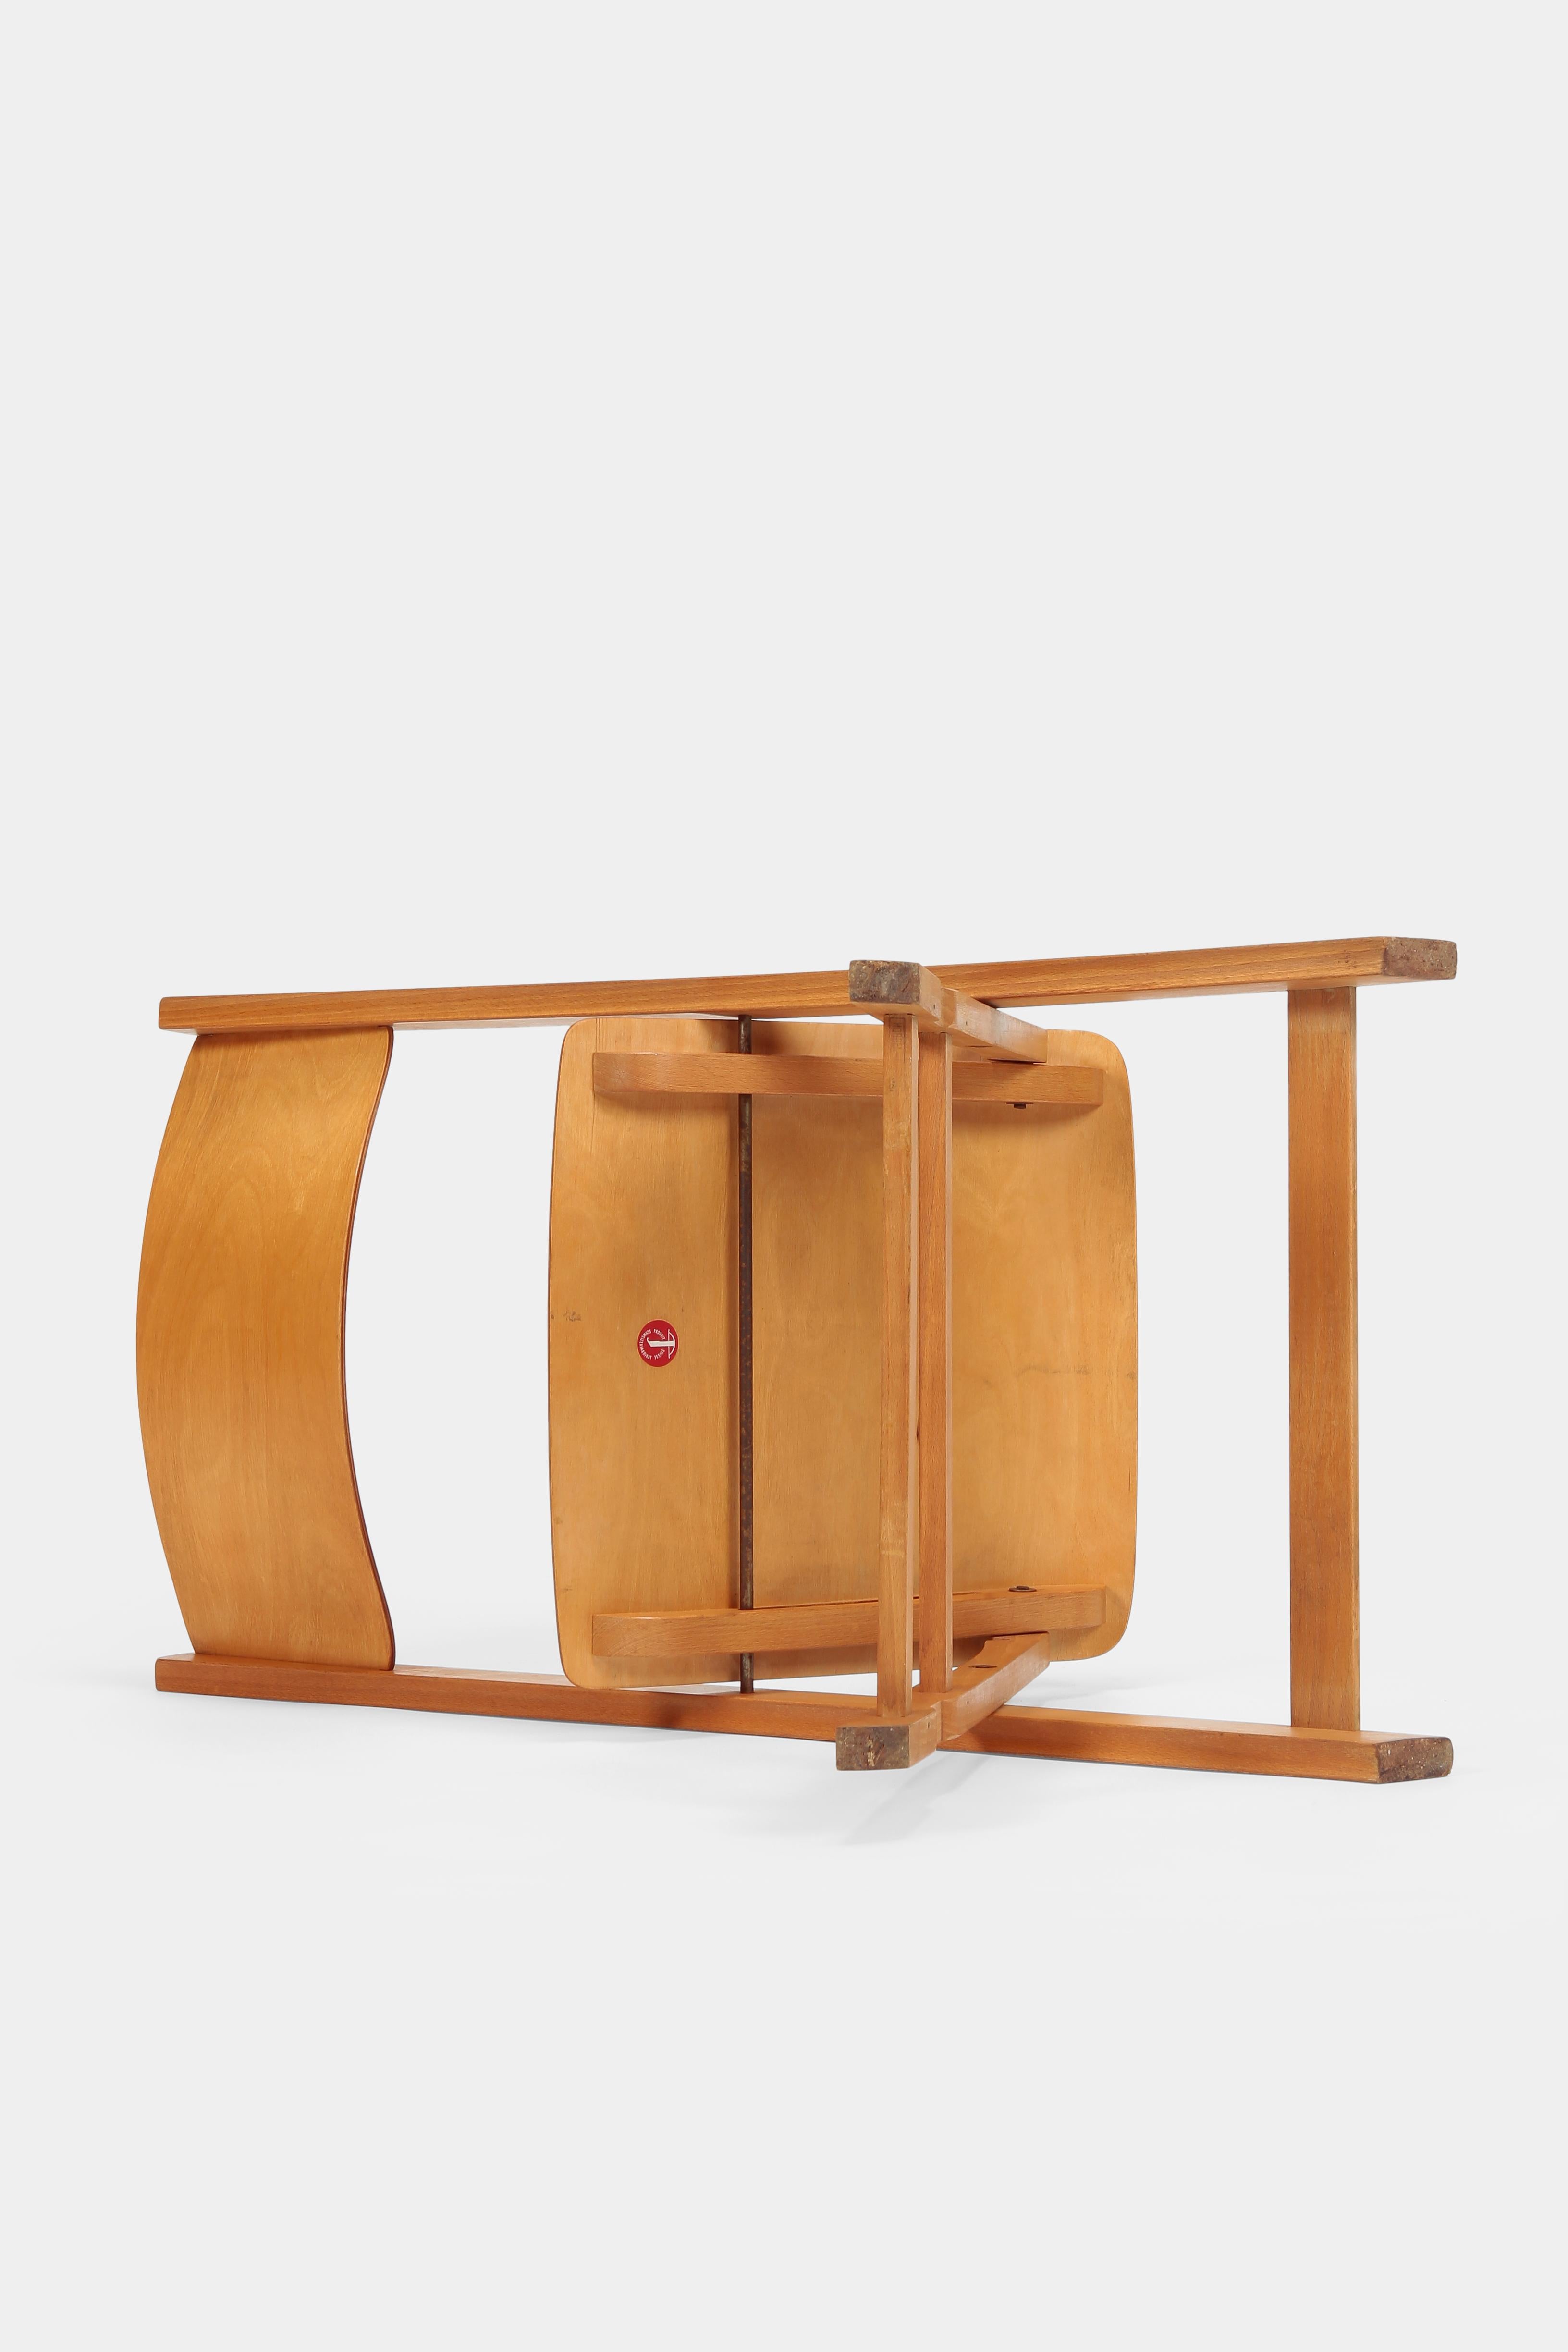 Swiss Midcentury Modern Birchwood Folding Chair, Wohnbedarf 1940s, Light Brown For Sale 2